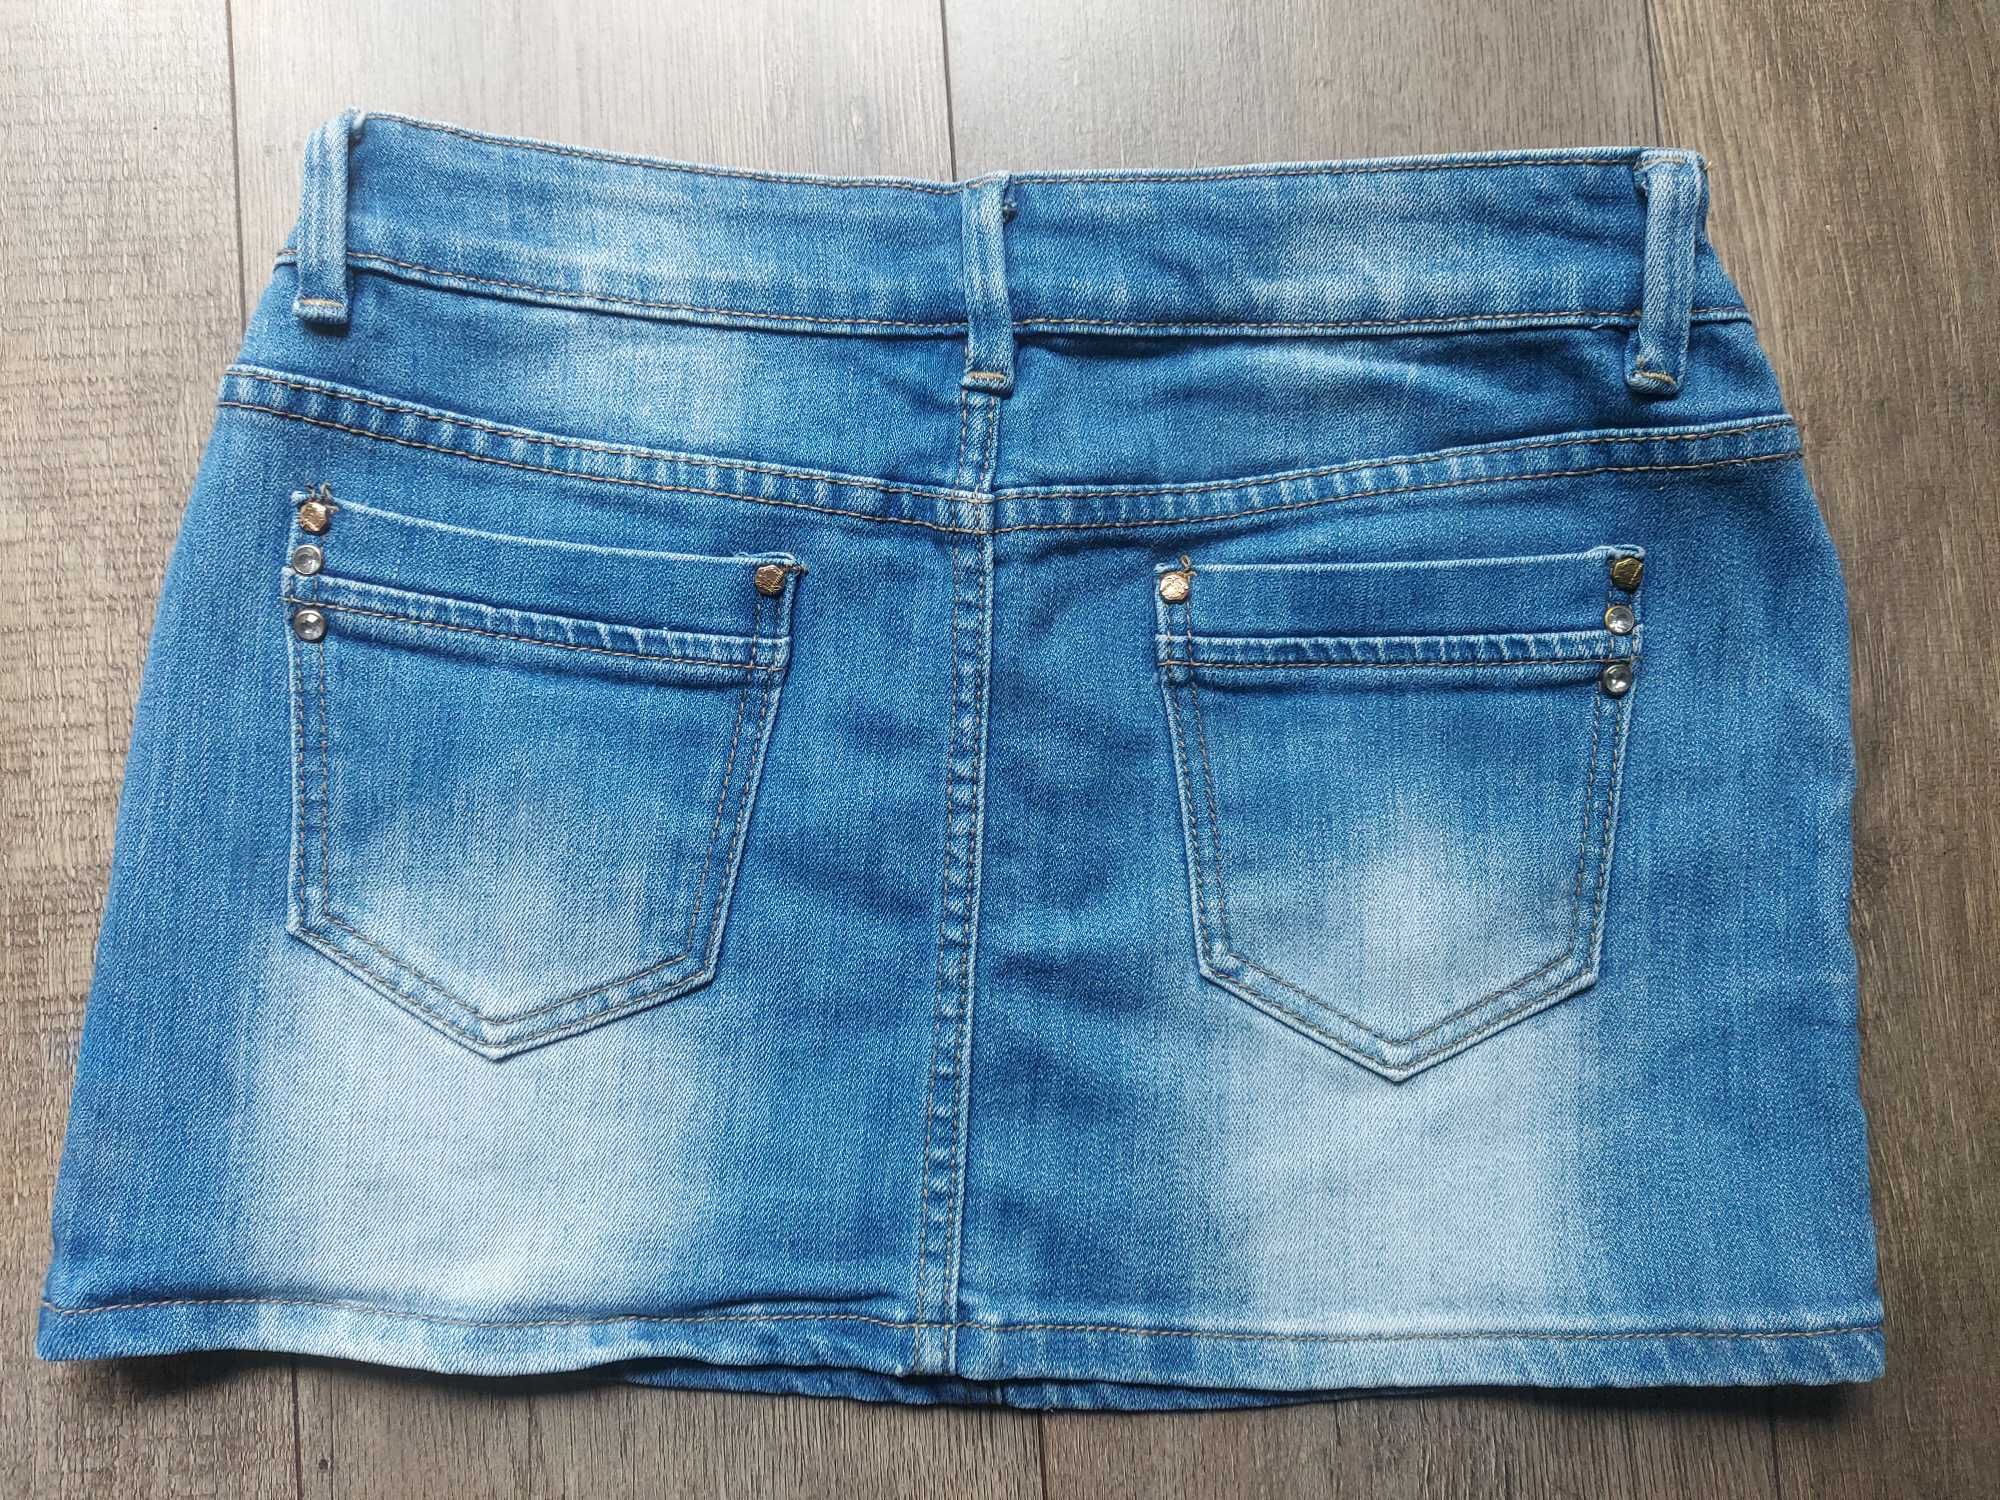 Spódniczka spódnica damska jeansowa jeans krótka mini JAK NOWA s